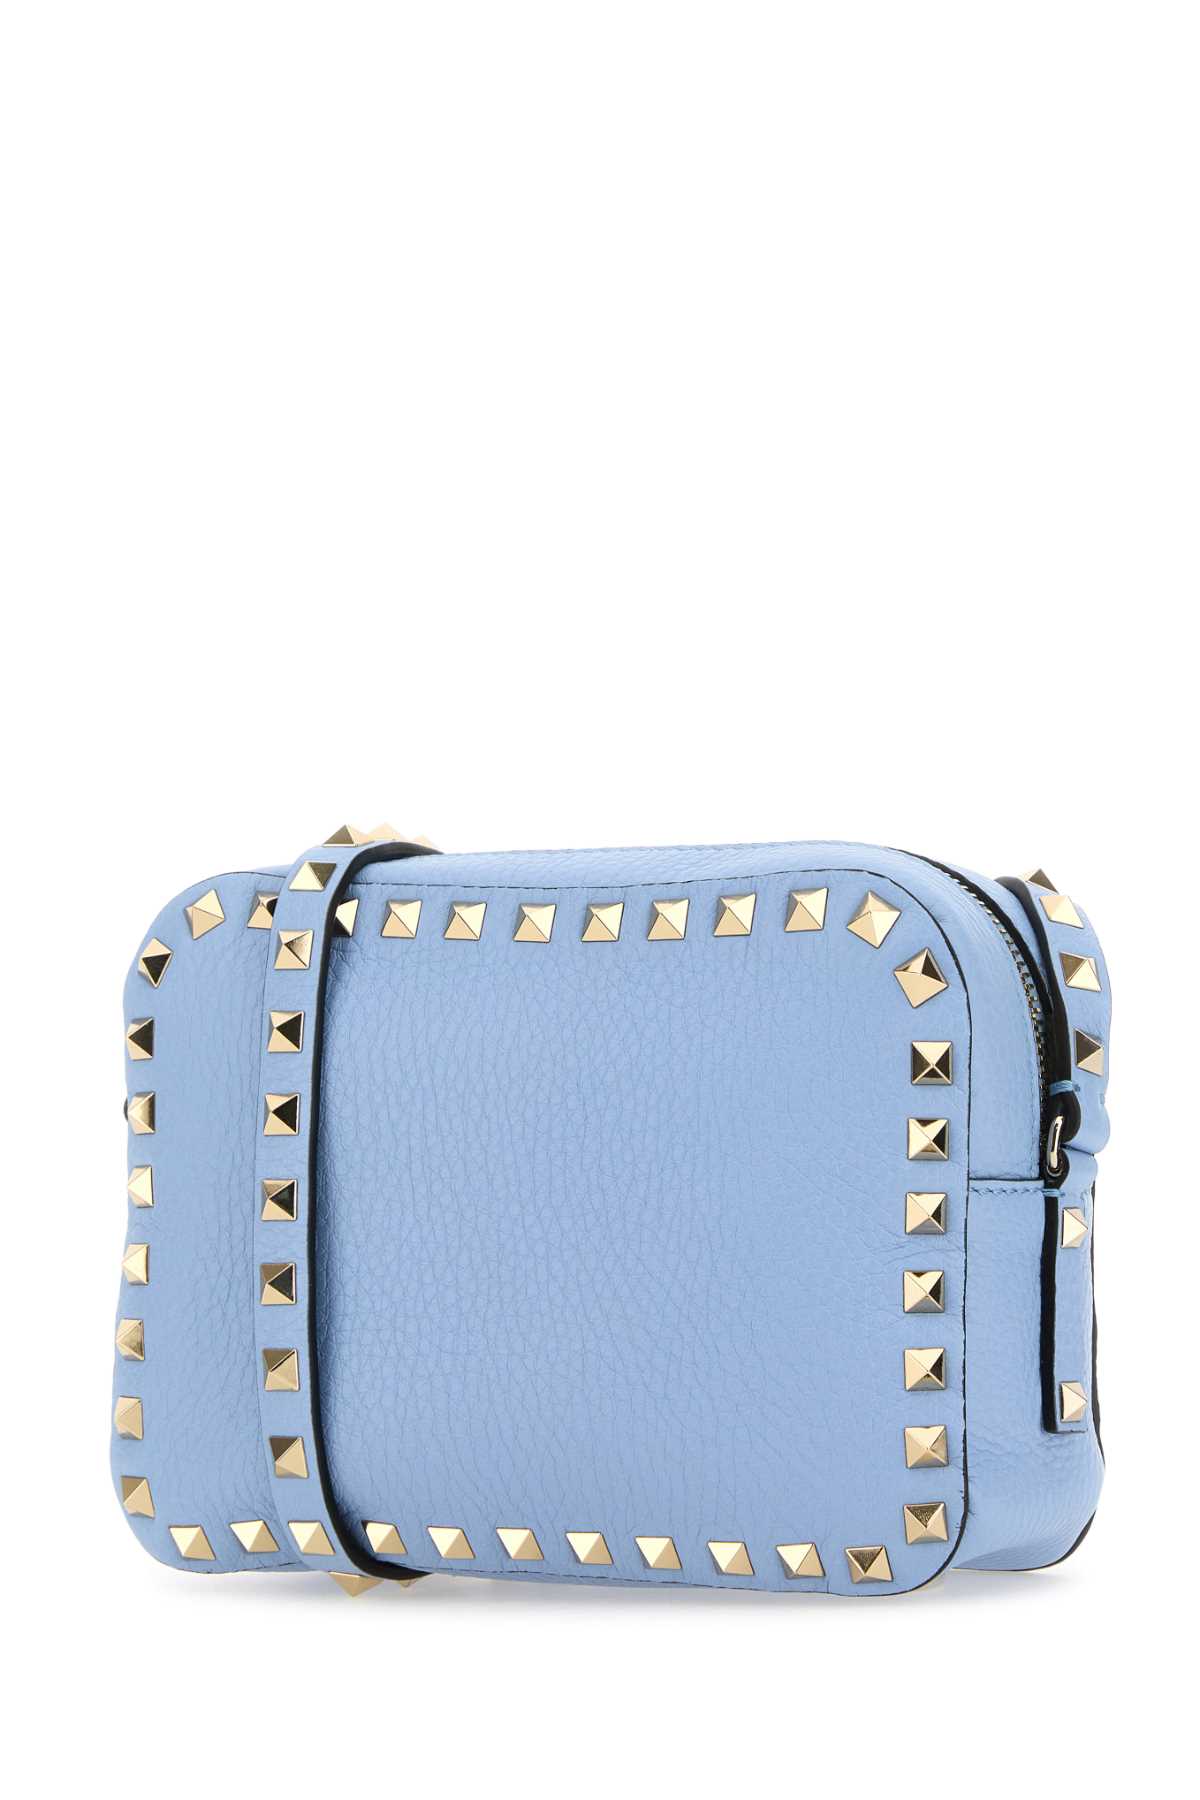 Valentino Garavani Light Blue Leather Rockstud Crossbody Bag In Popelineblue